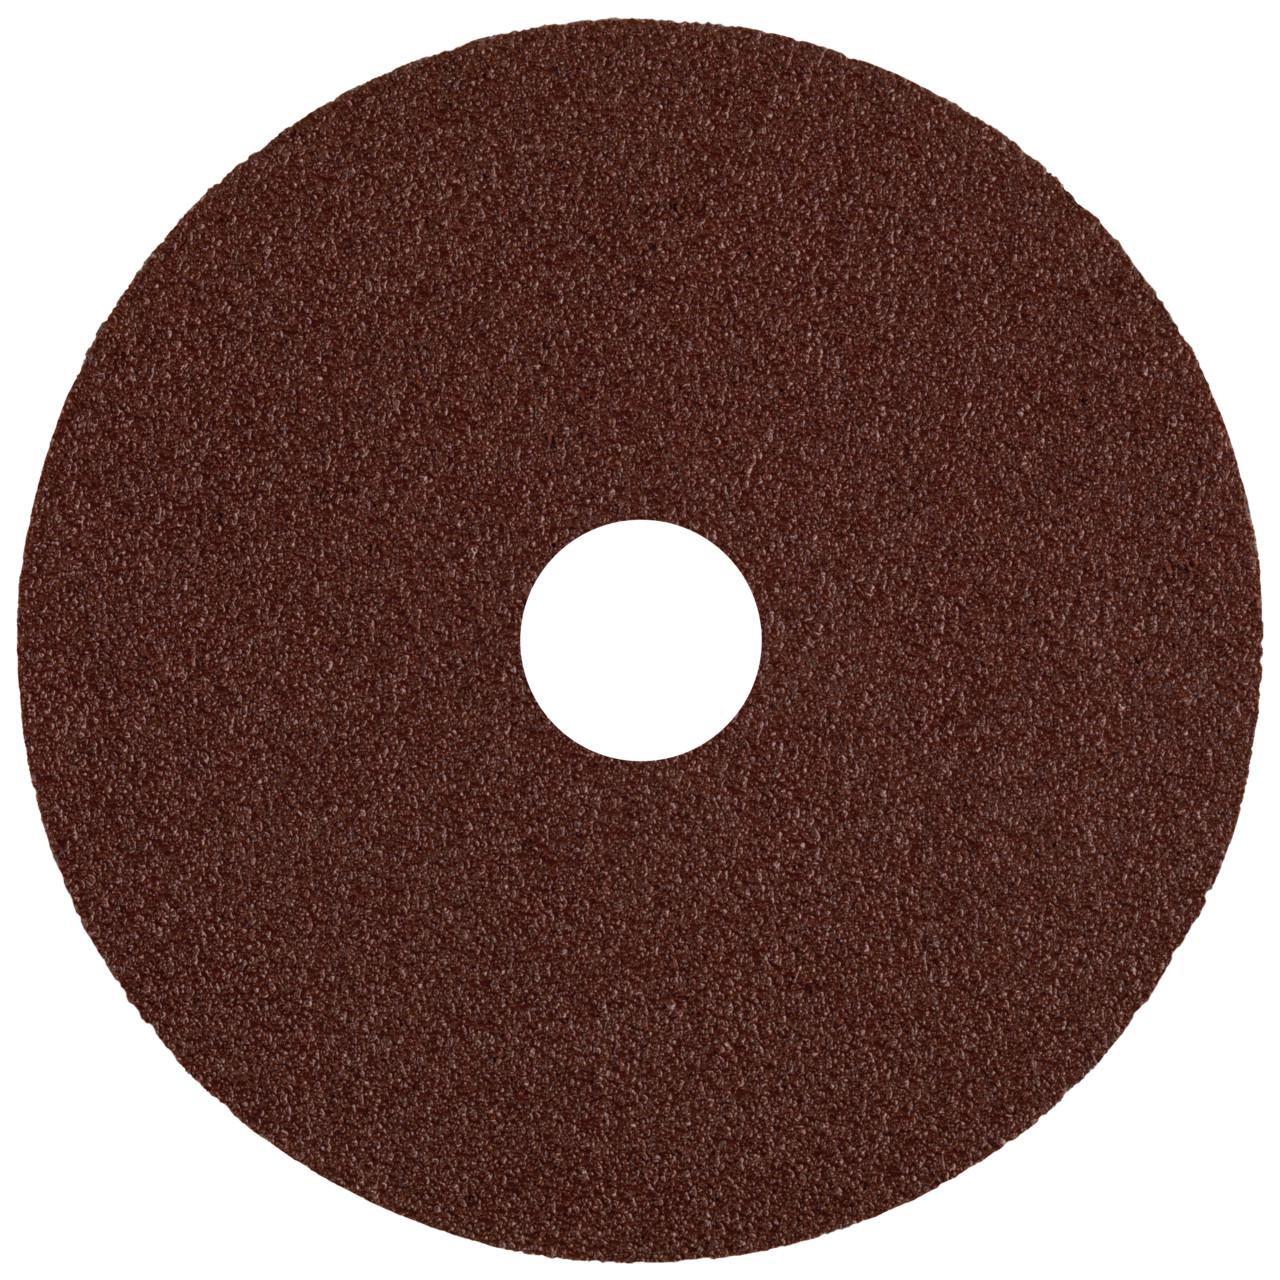 Tyrolit A-B02 V Vulcanised fibre disc DxH 180x22 For steel, non-ferrous metals and wood, P120, shape: DISC, Art. 34286513